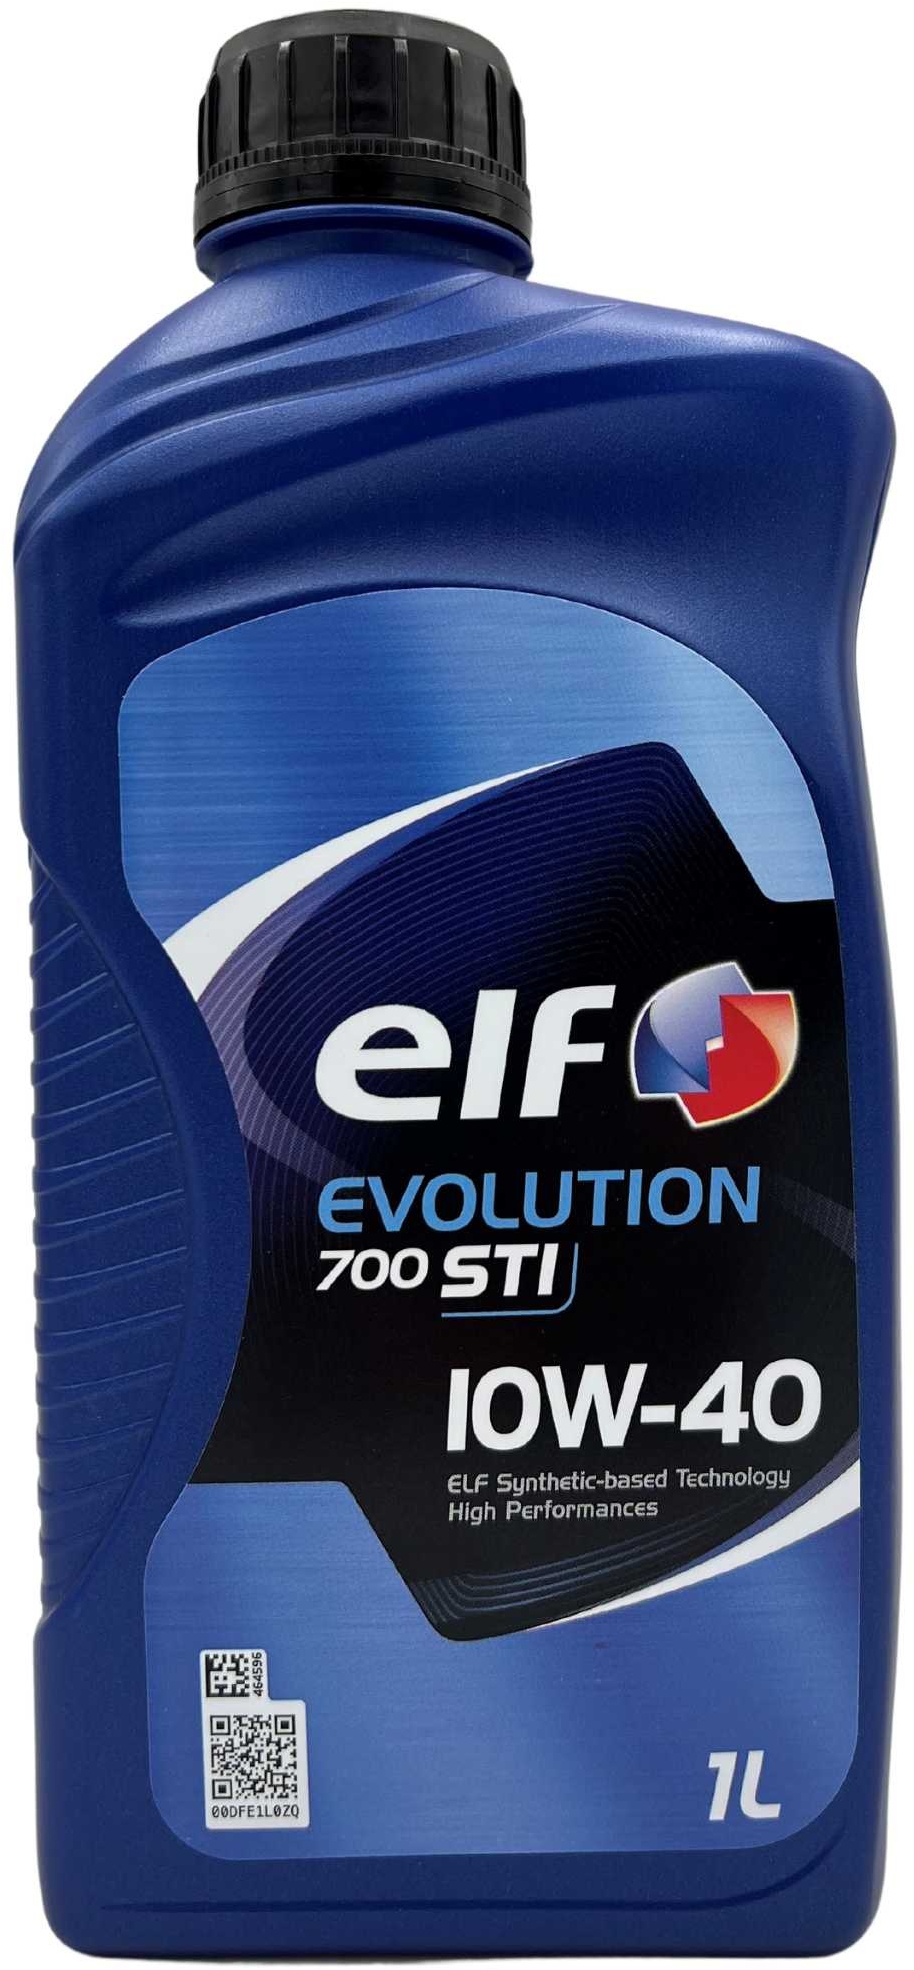 Elf Evolution 700 STI 10W-40 1 Liter